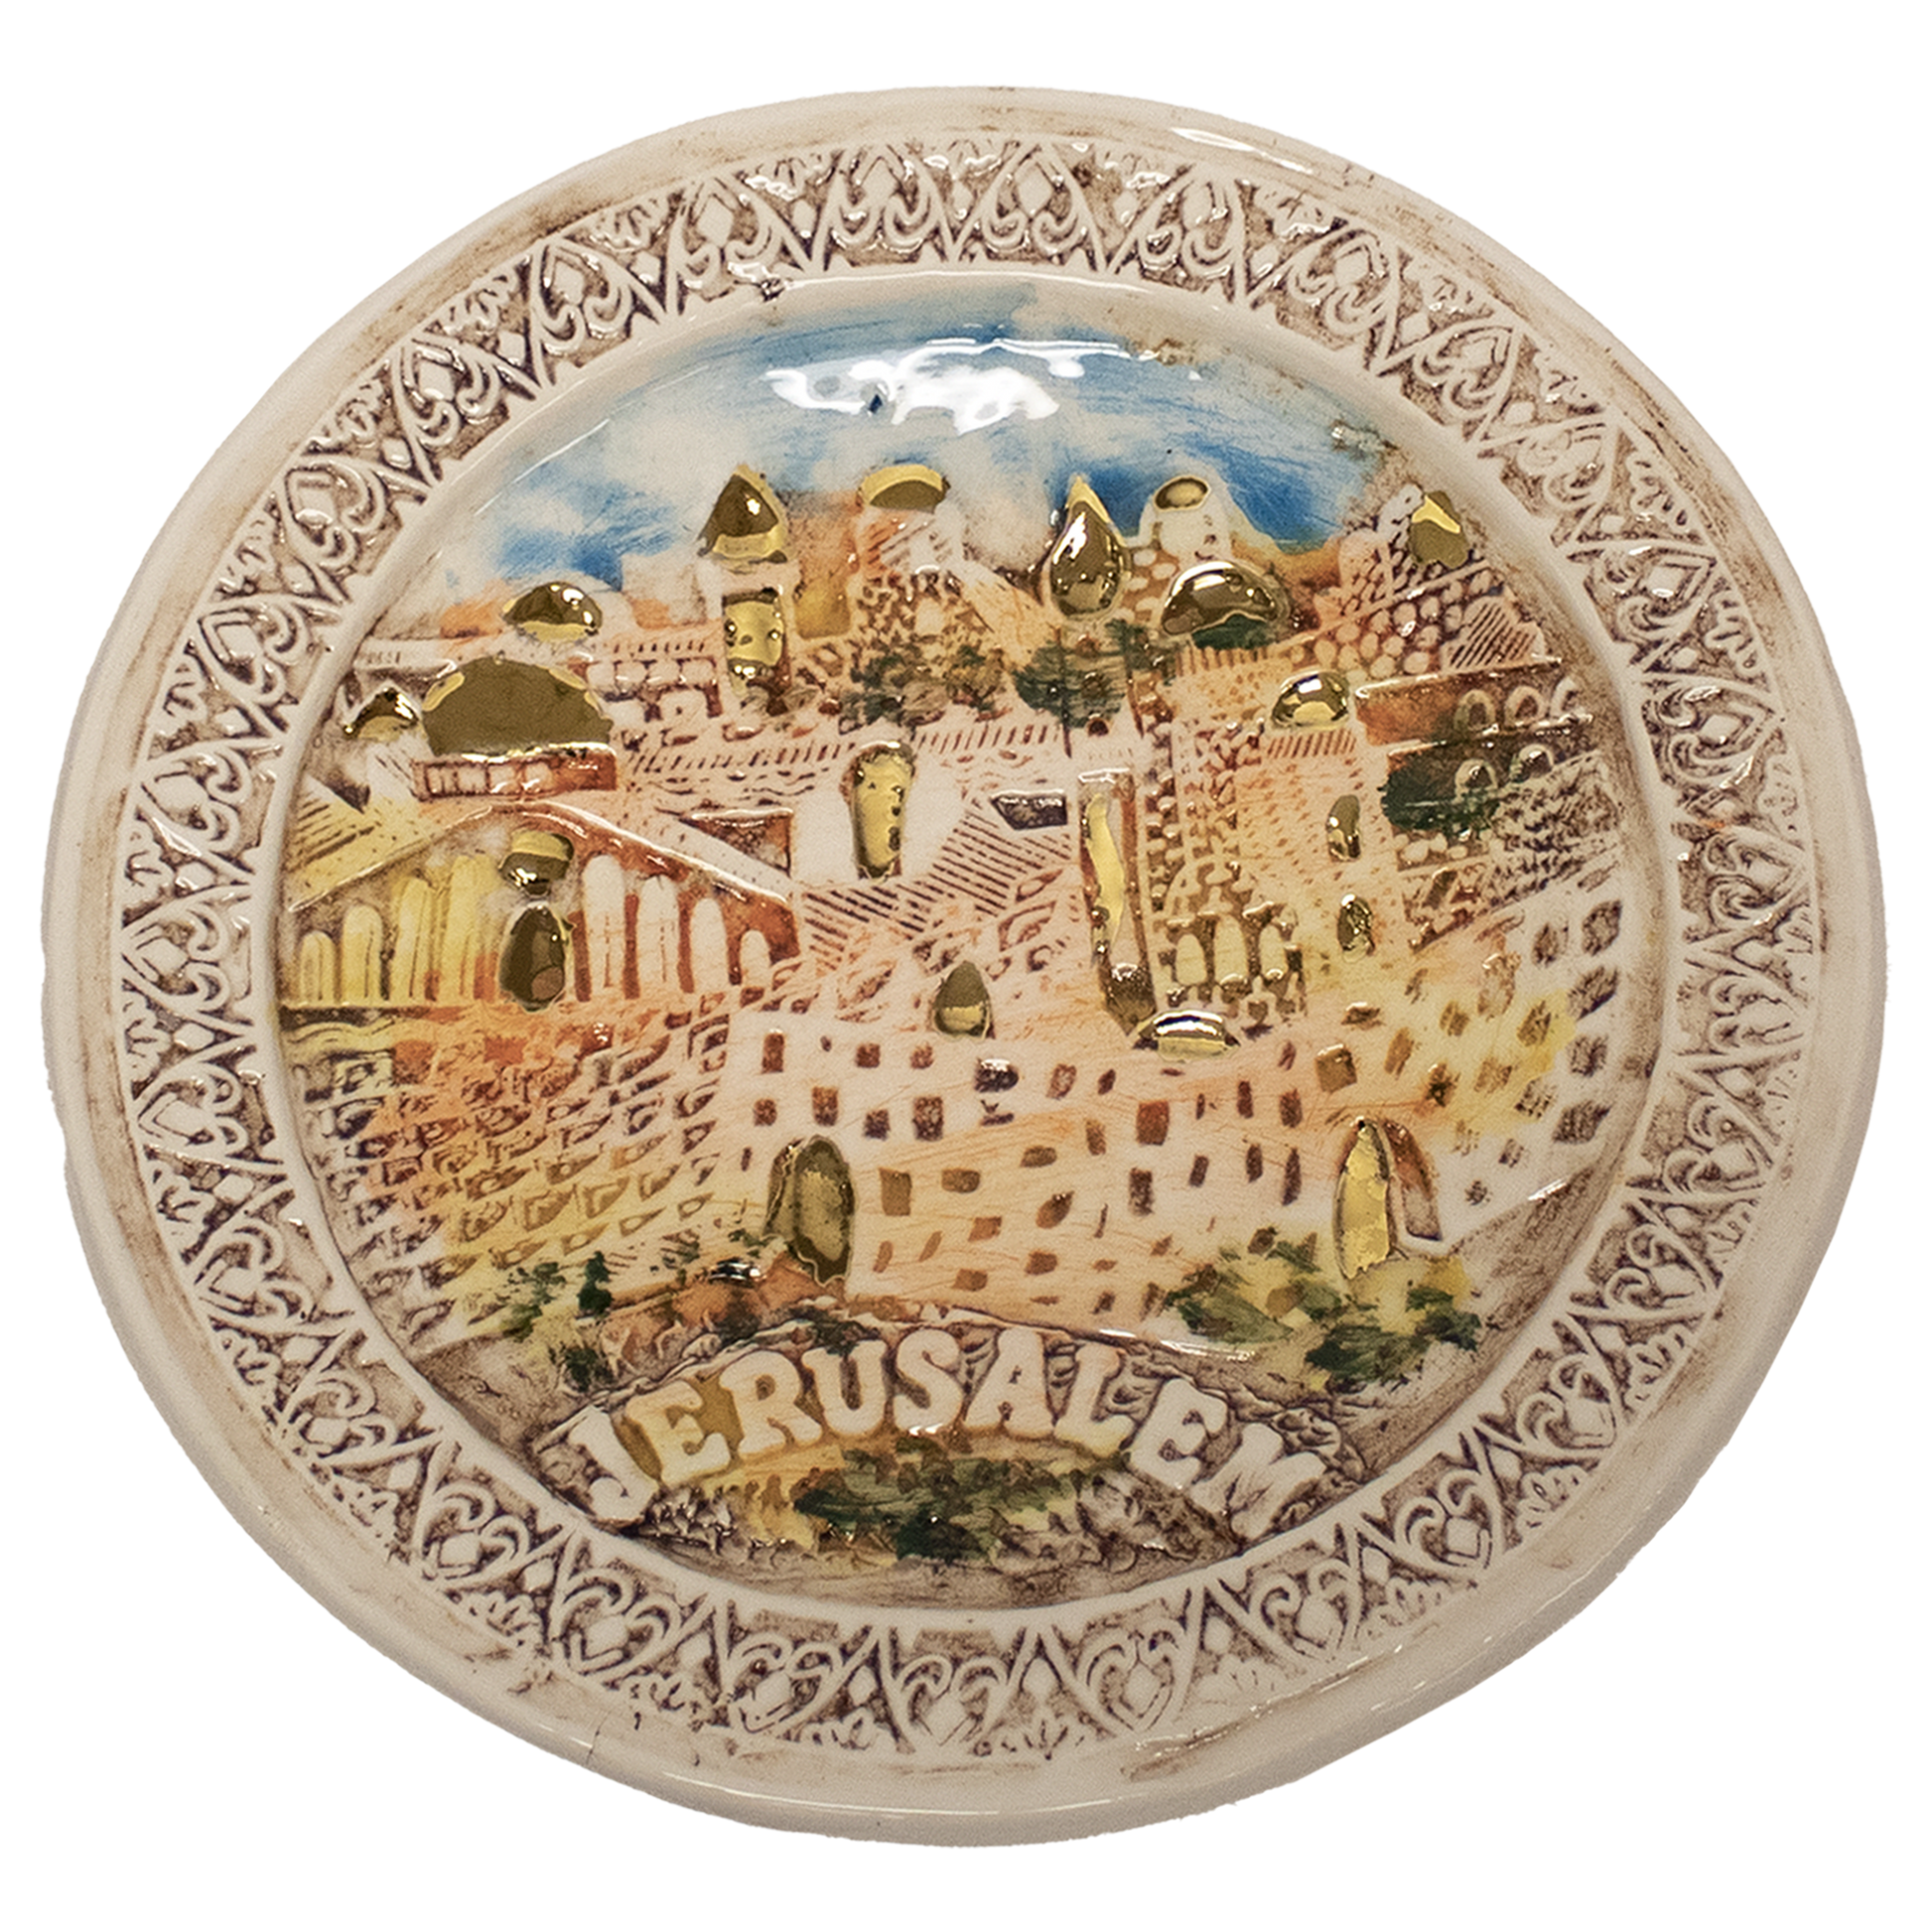 Hand Painted made in Israel Decorative Ceramic Plate Medium